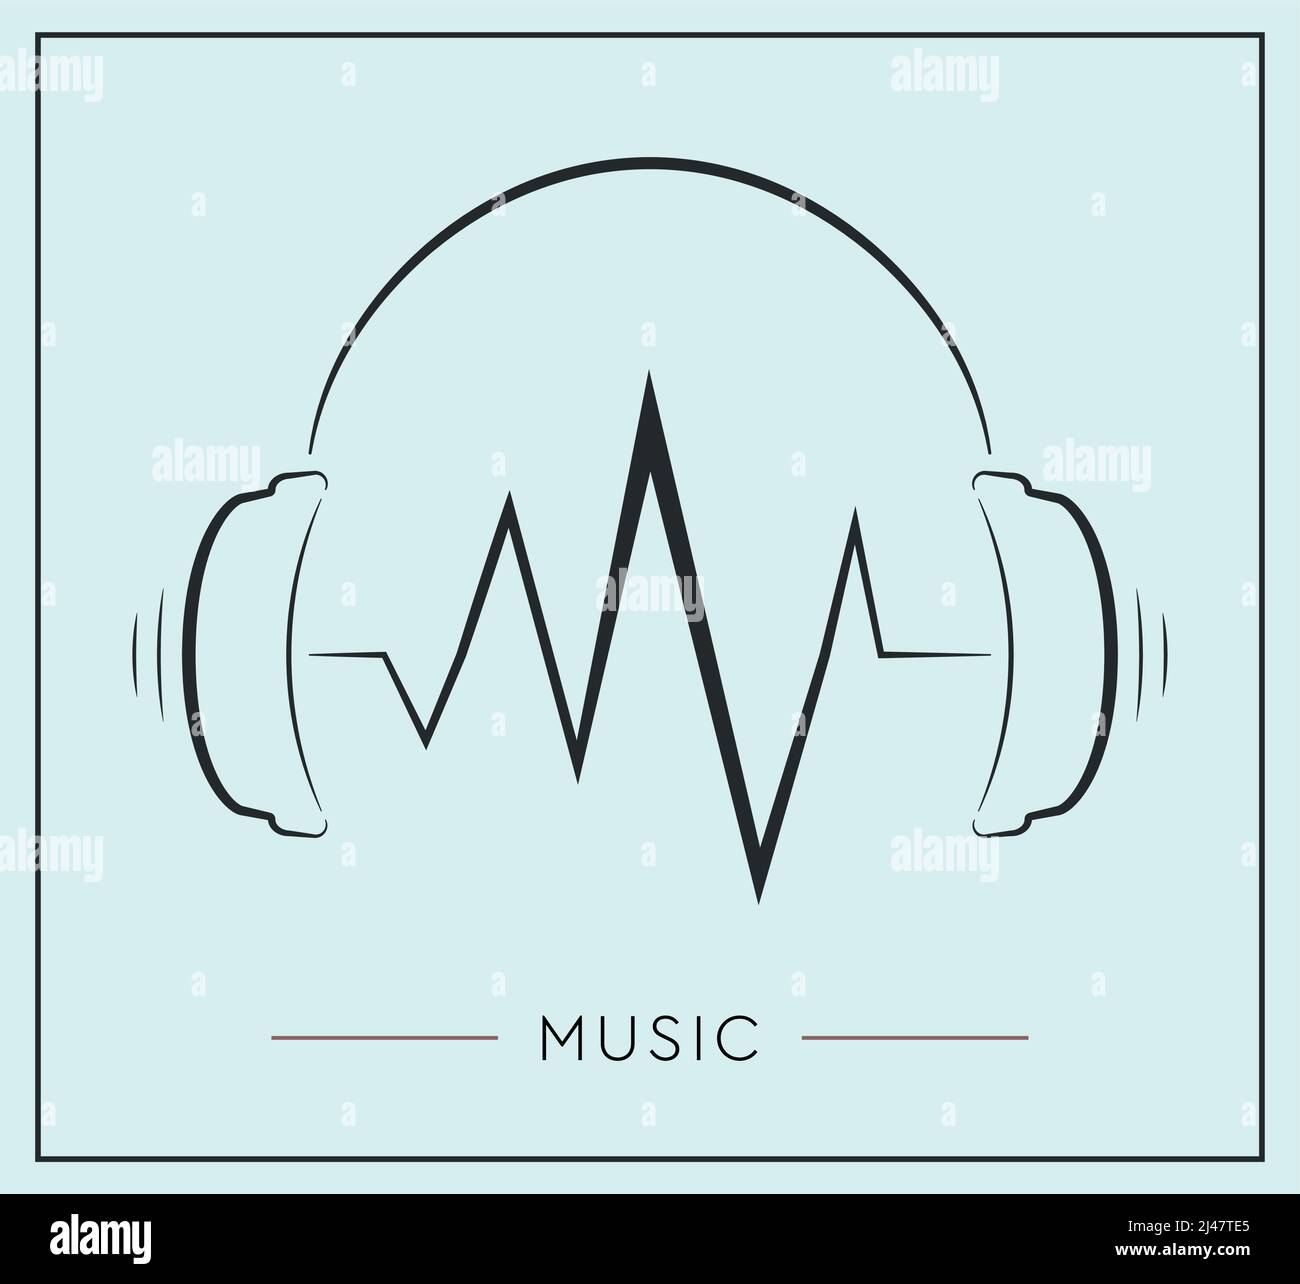 Headphones Icon With Sound Wave Beats Headphones Icon With Sound Wave Beats. Dj. Podcast, Music lover, Music Album Cover Stock Vector